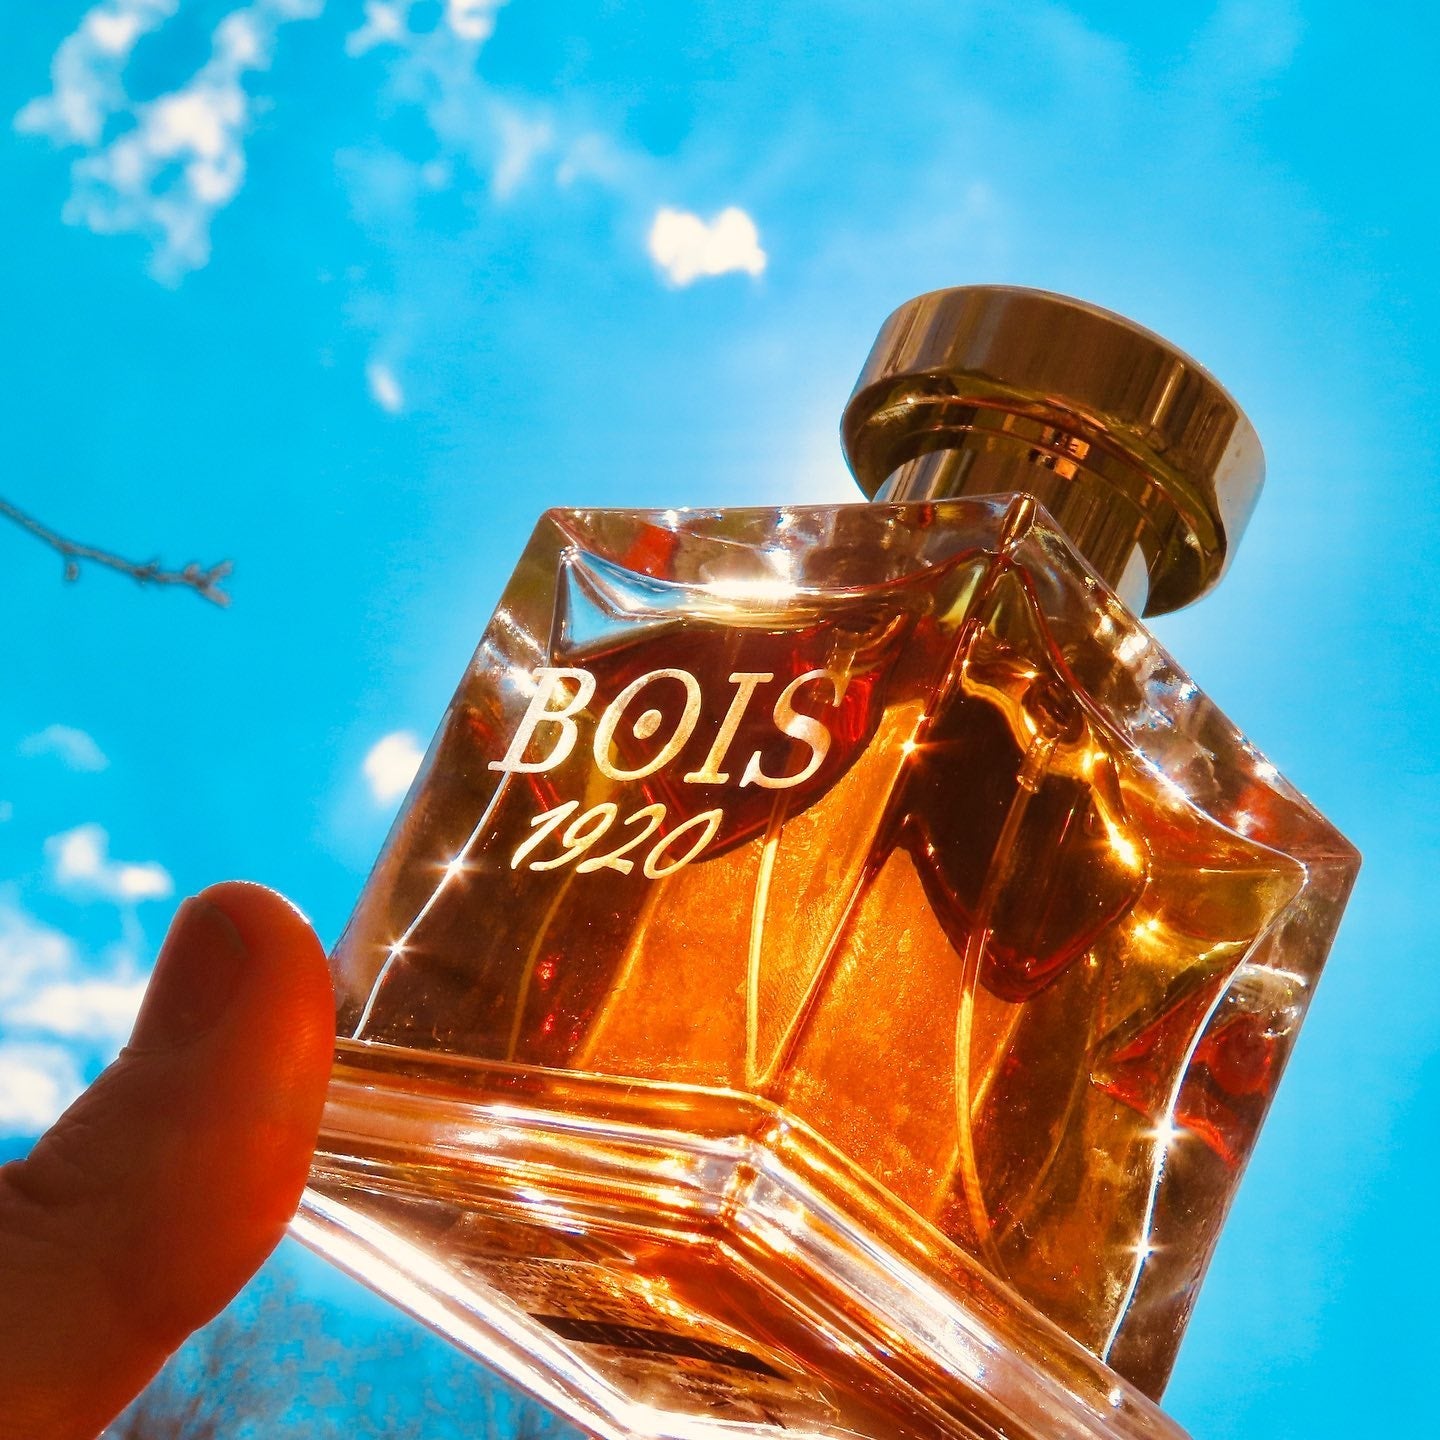 Bois 1920 Elite I Parfum | My Perfume Shop Australia